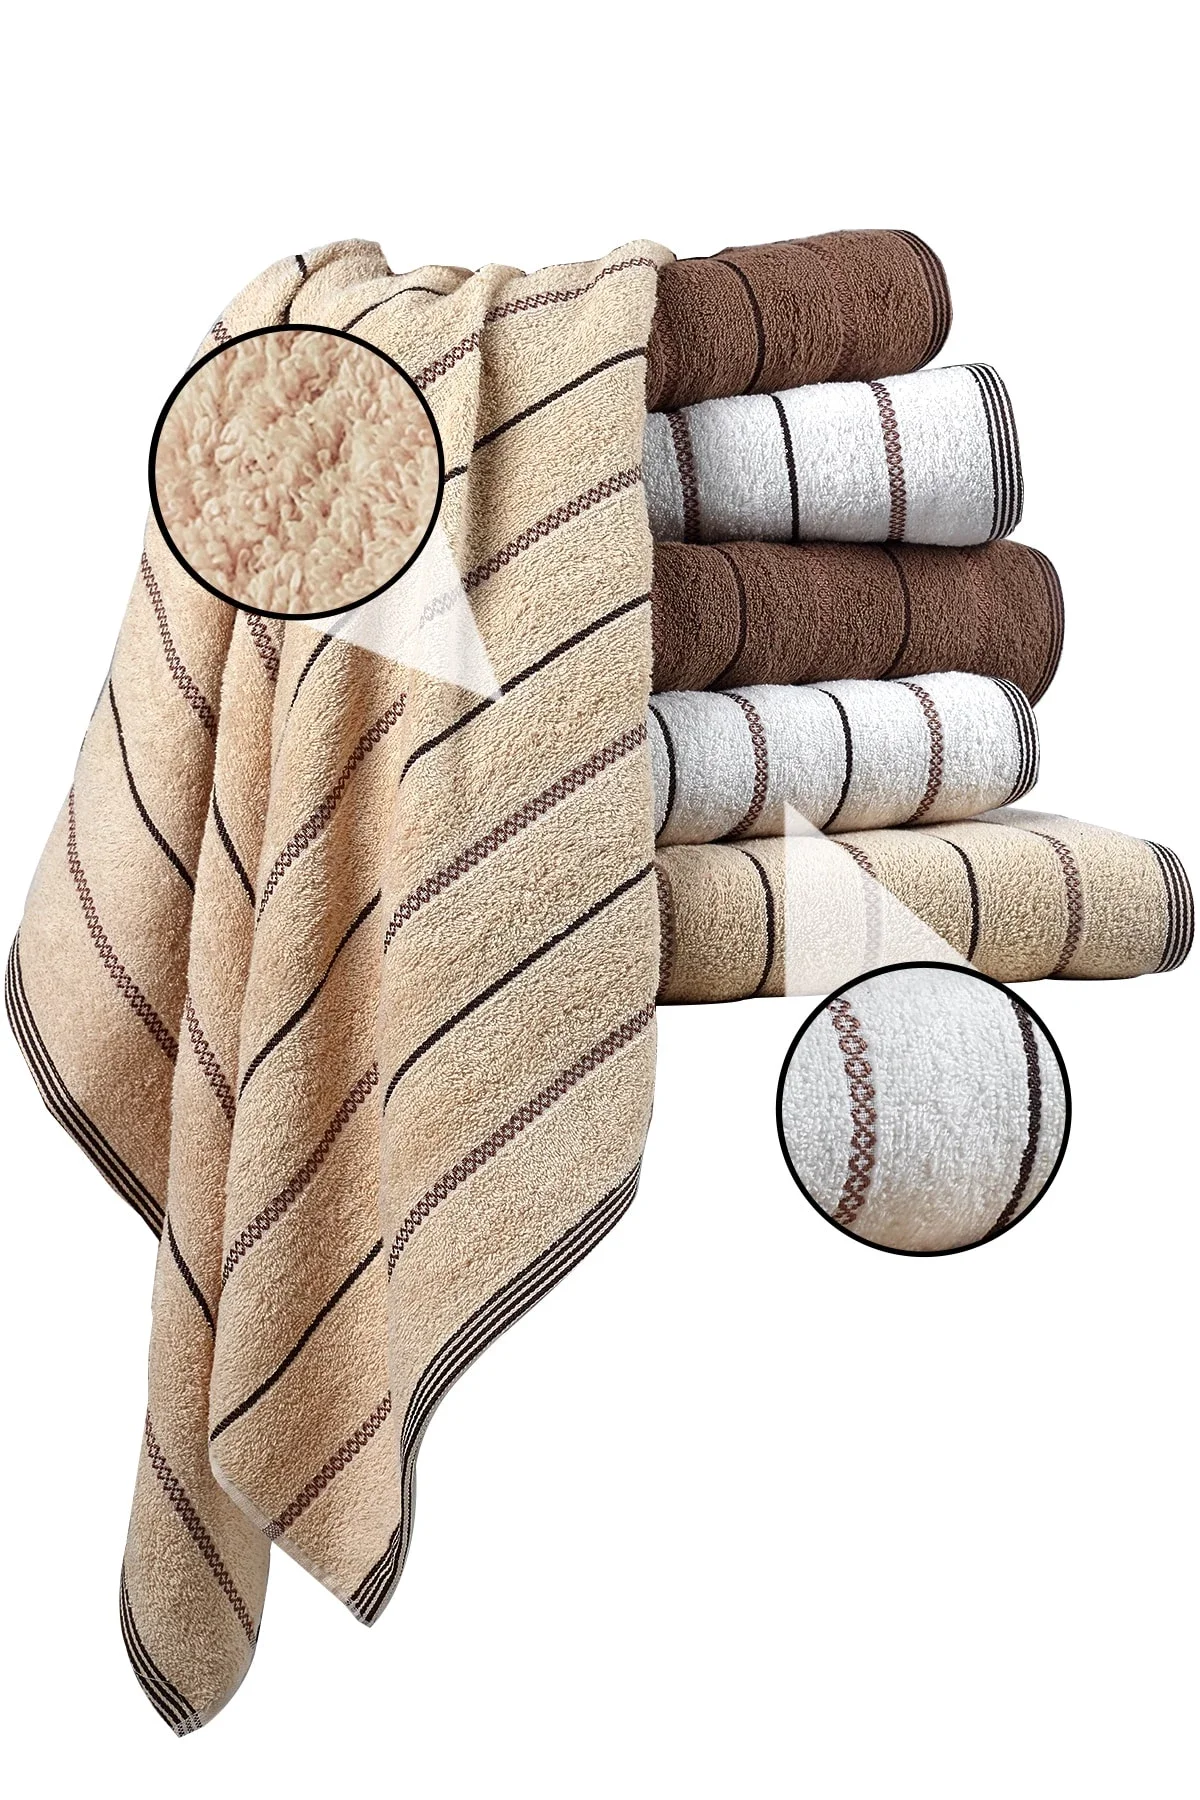 Set | 100% Organic Cotton | Decorative Bathroom Towel For Bath, Beach, Pool, Travel, Spa, And Yoga